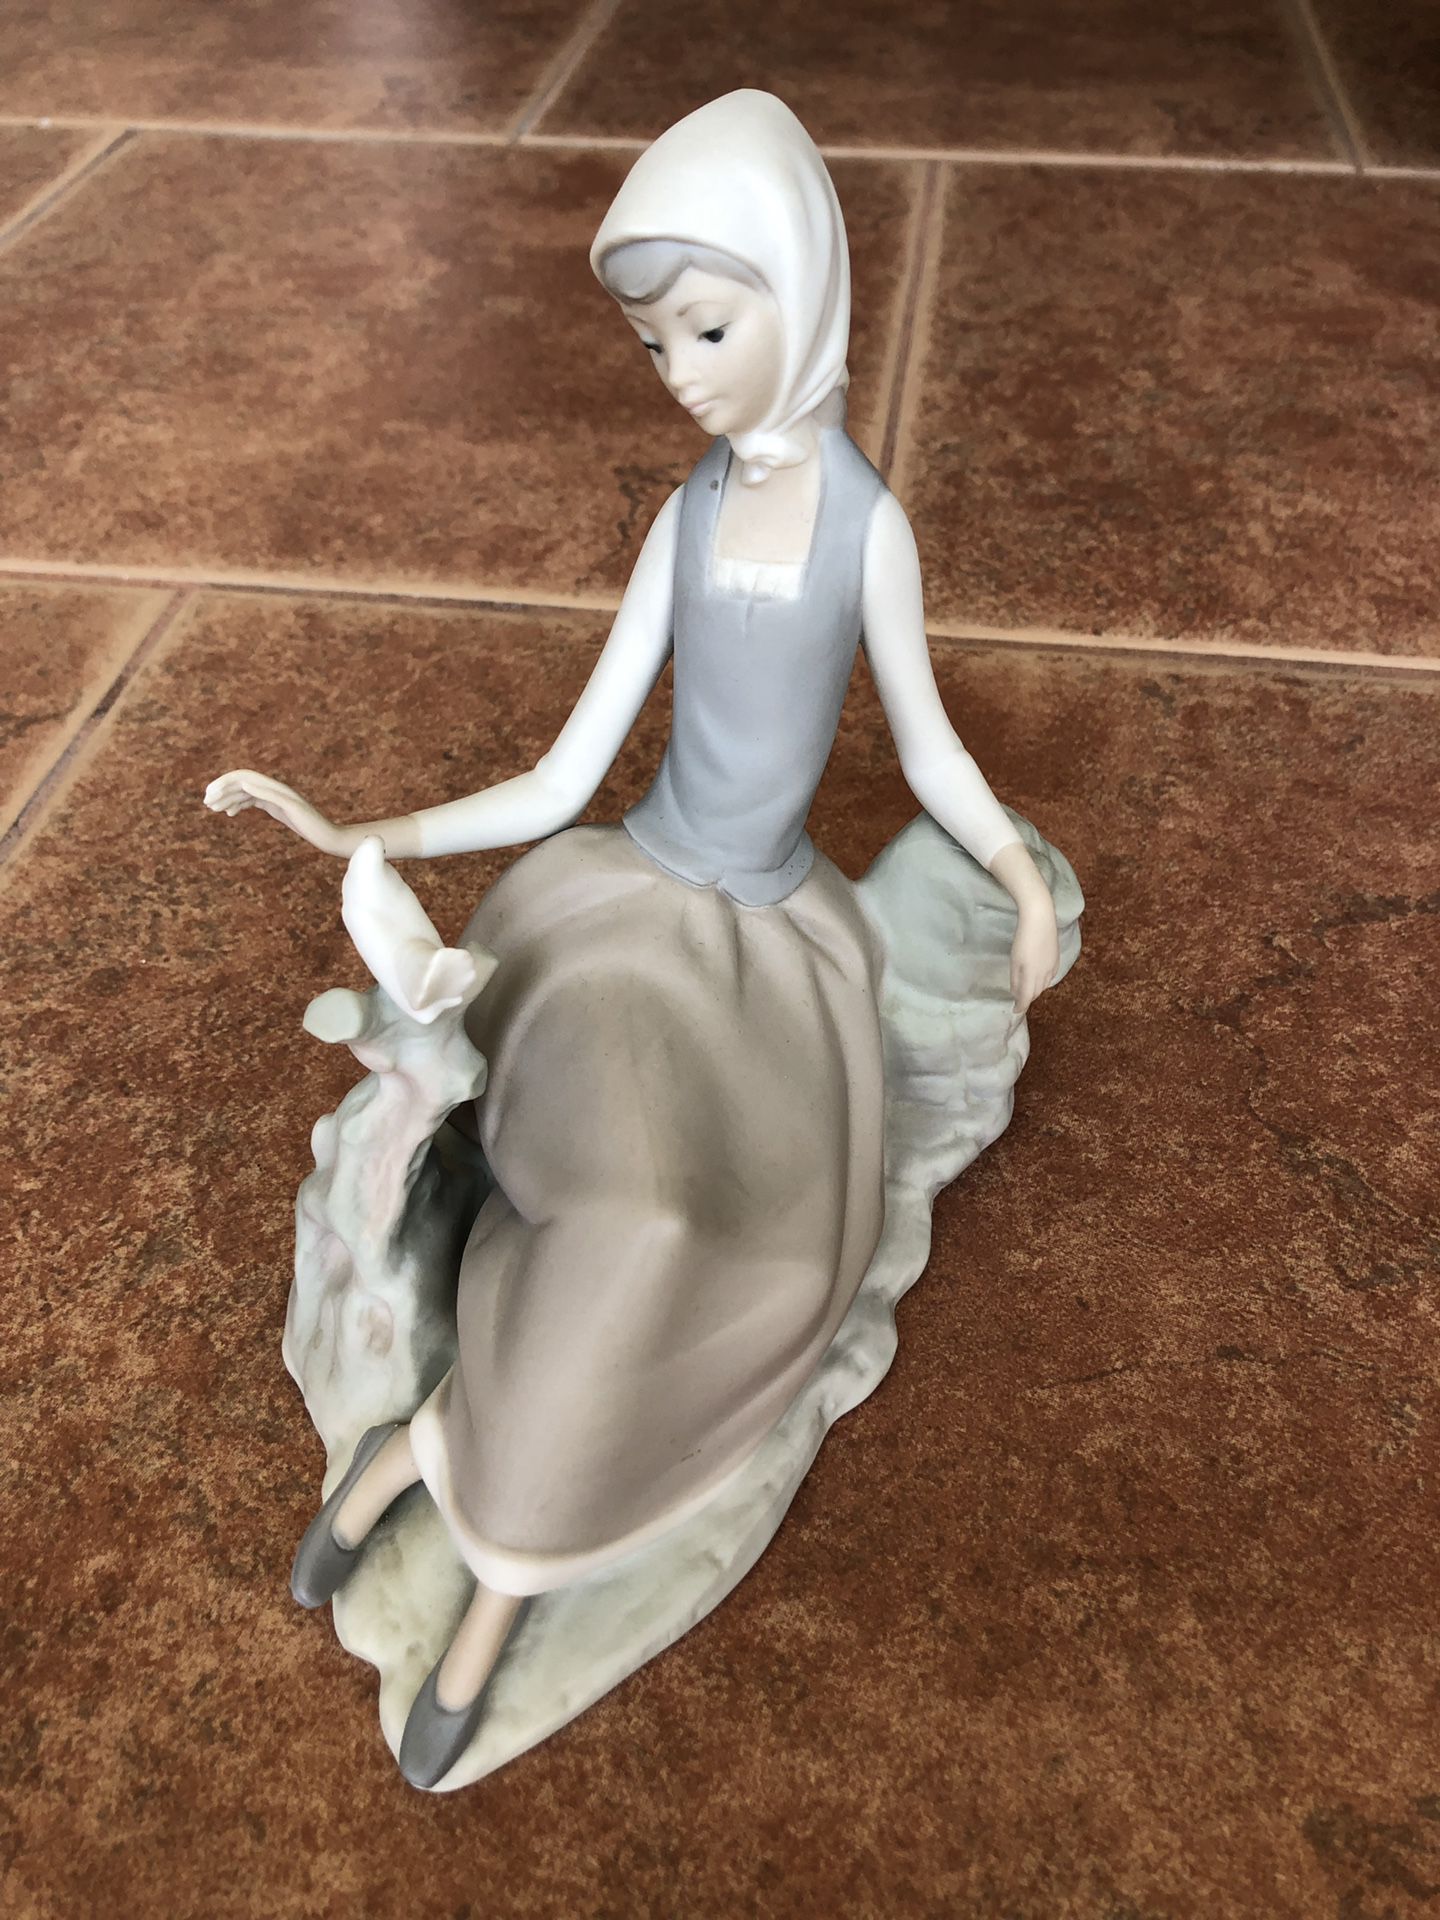 Lladro “Shepherd Girl” Figurine - EXCELLENT condition $150